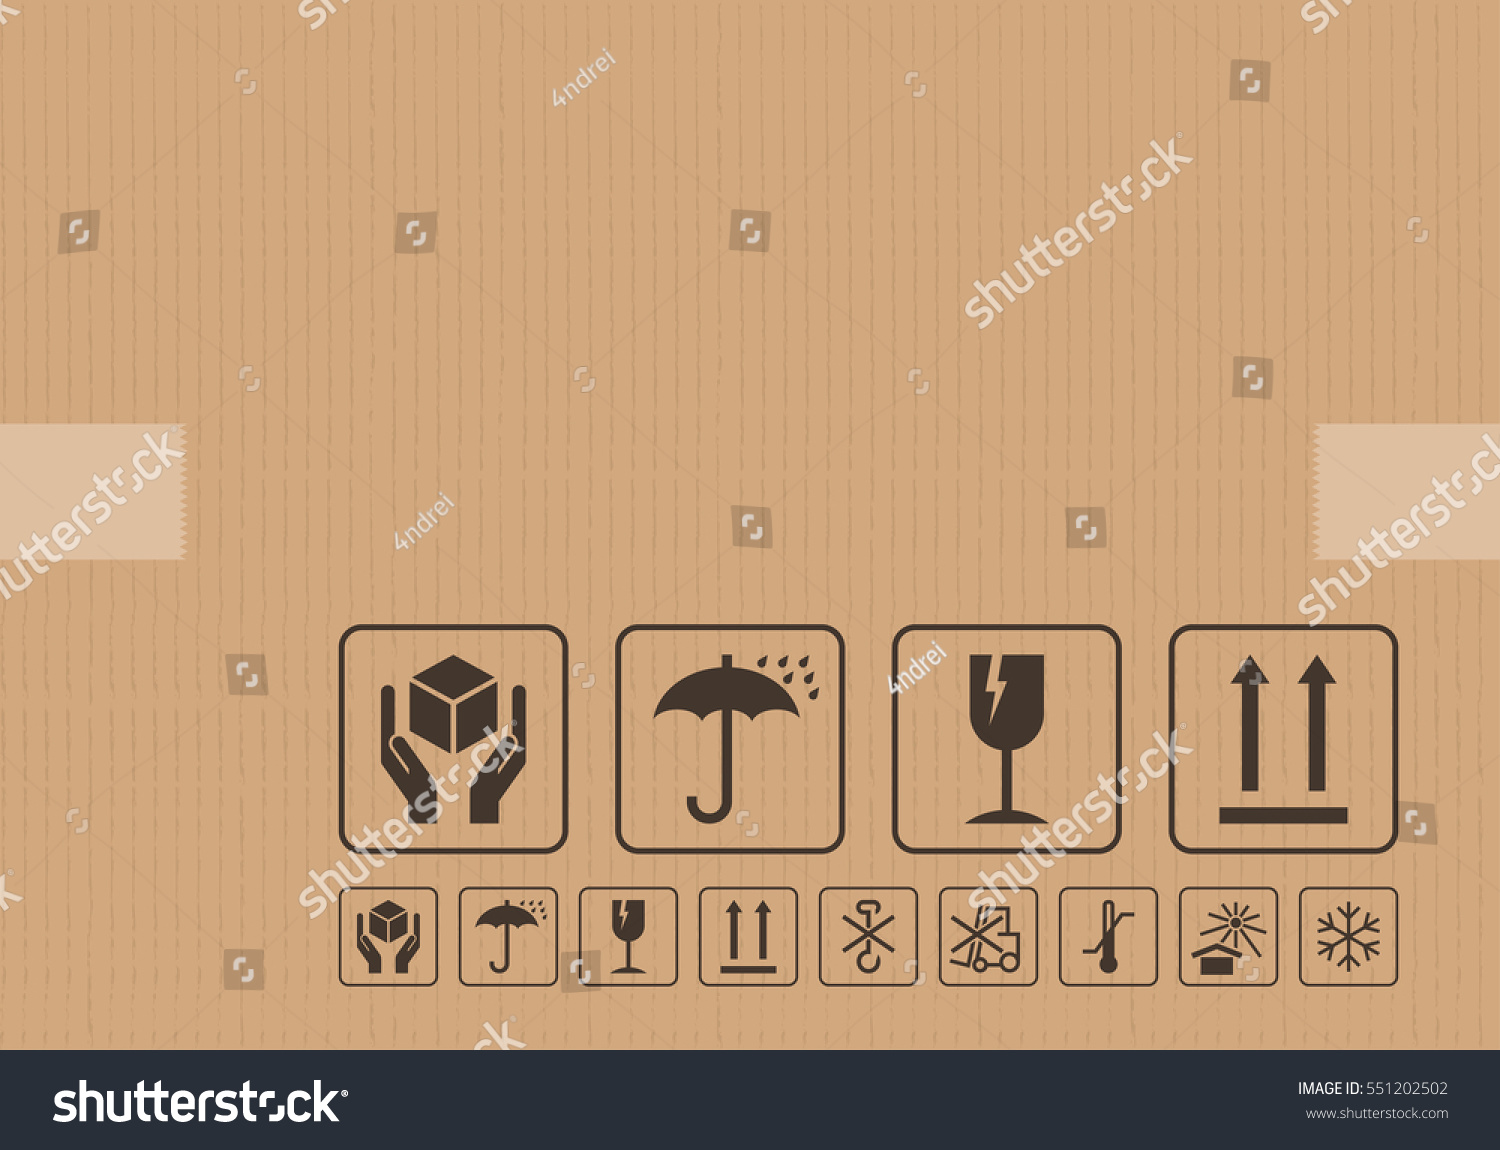 Carton cardboard box icons #551202502